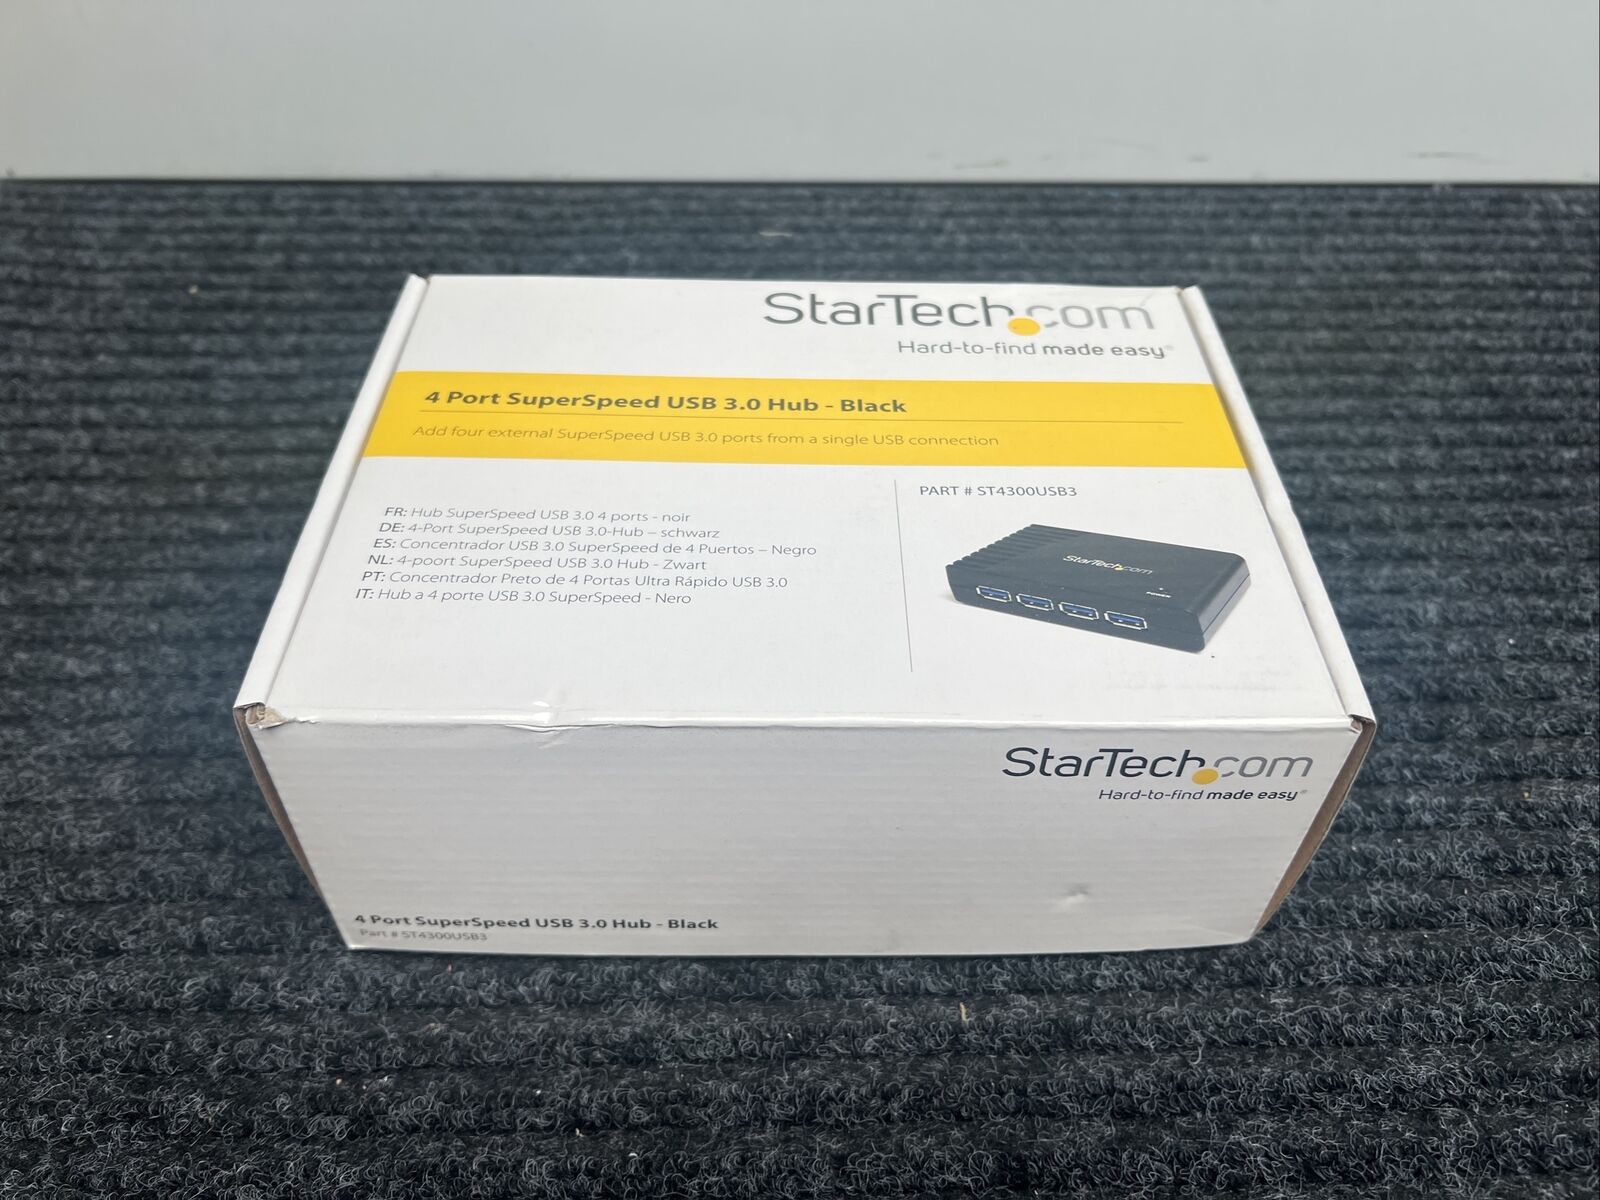 New StarTech.com 4 Port SuperSpeed USB 3.0 Hub ST4300USB3